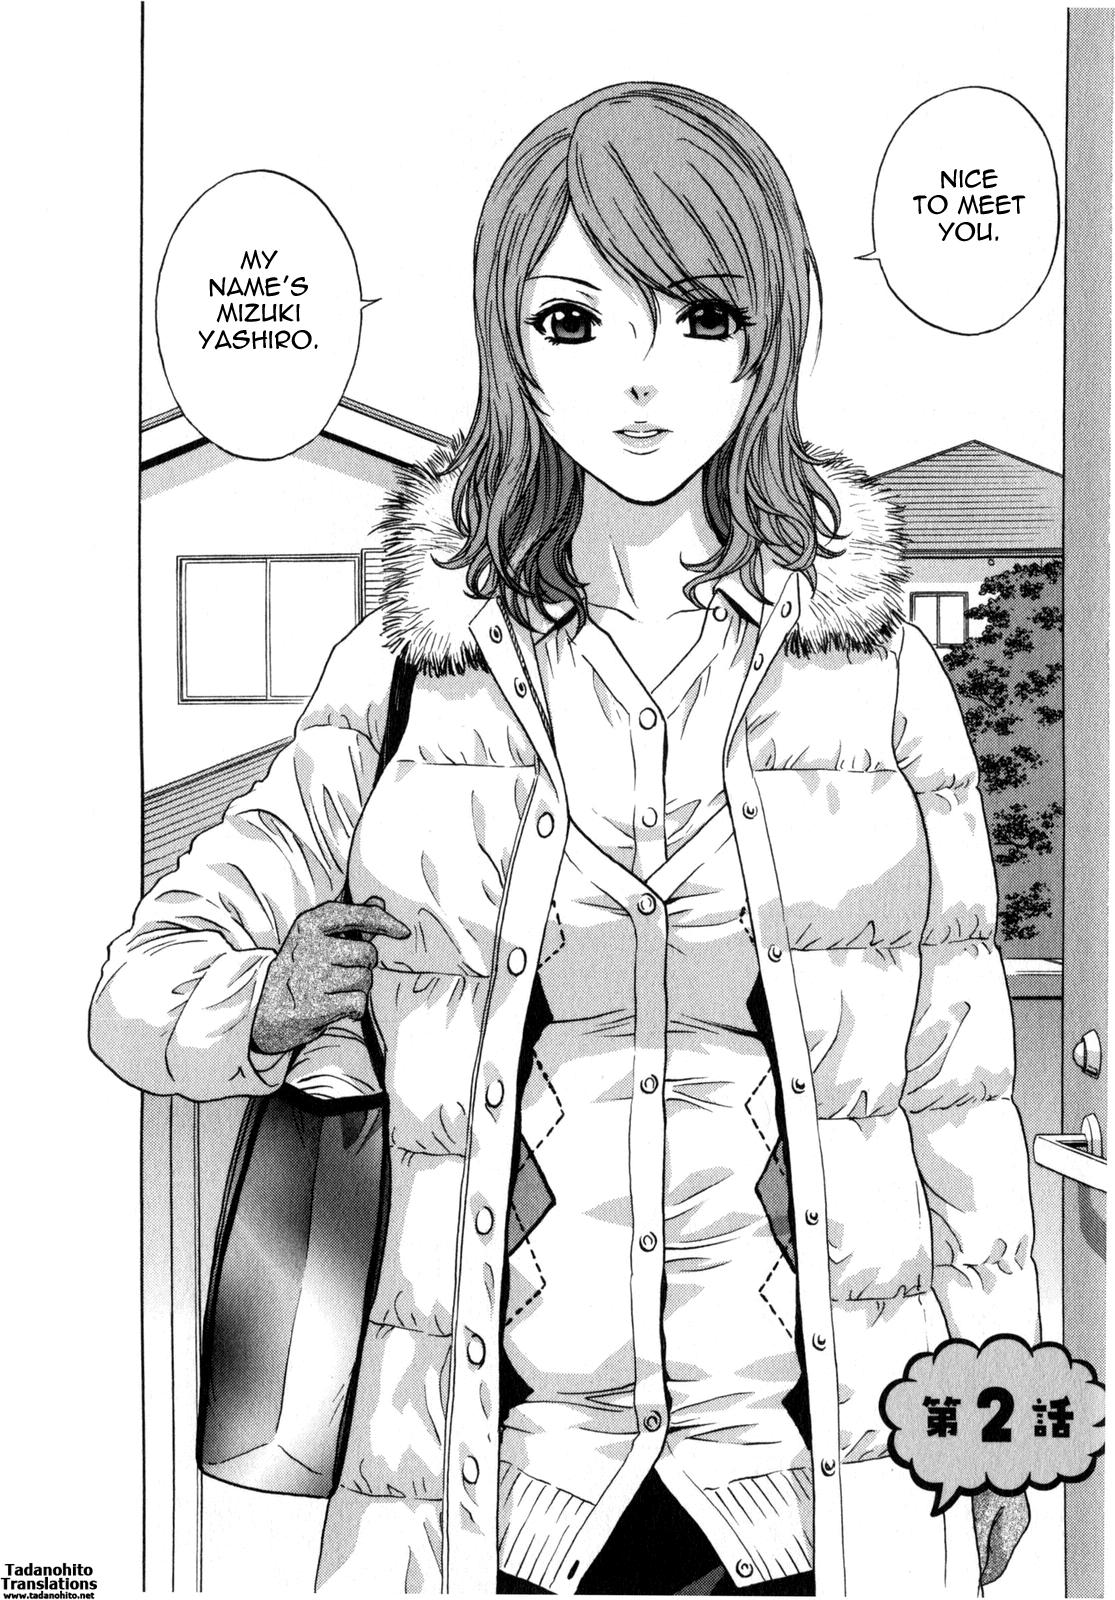 [Hidemaru] Life with Married Women Just Like a Manga 2 - Ch. 1-5 [English] {Tadanohito} 28